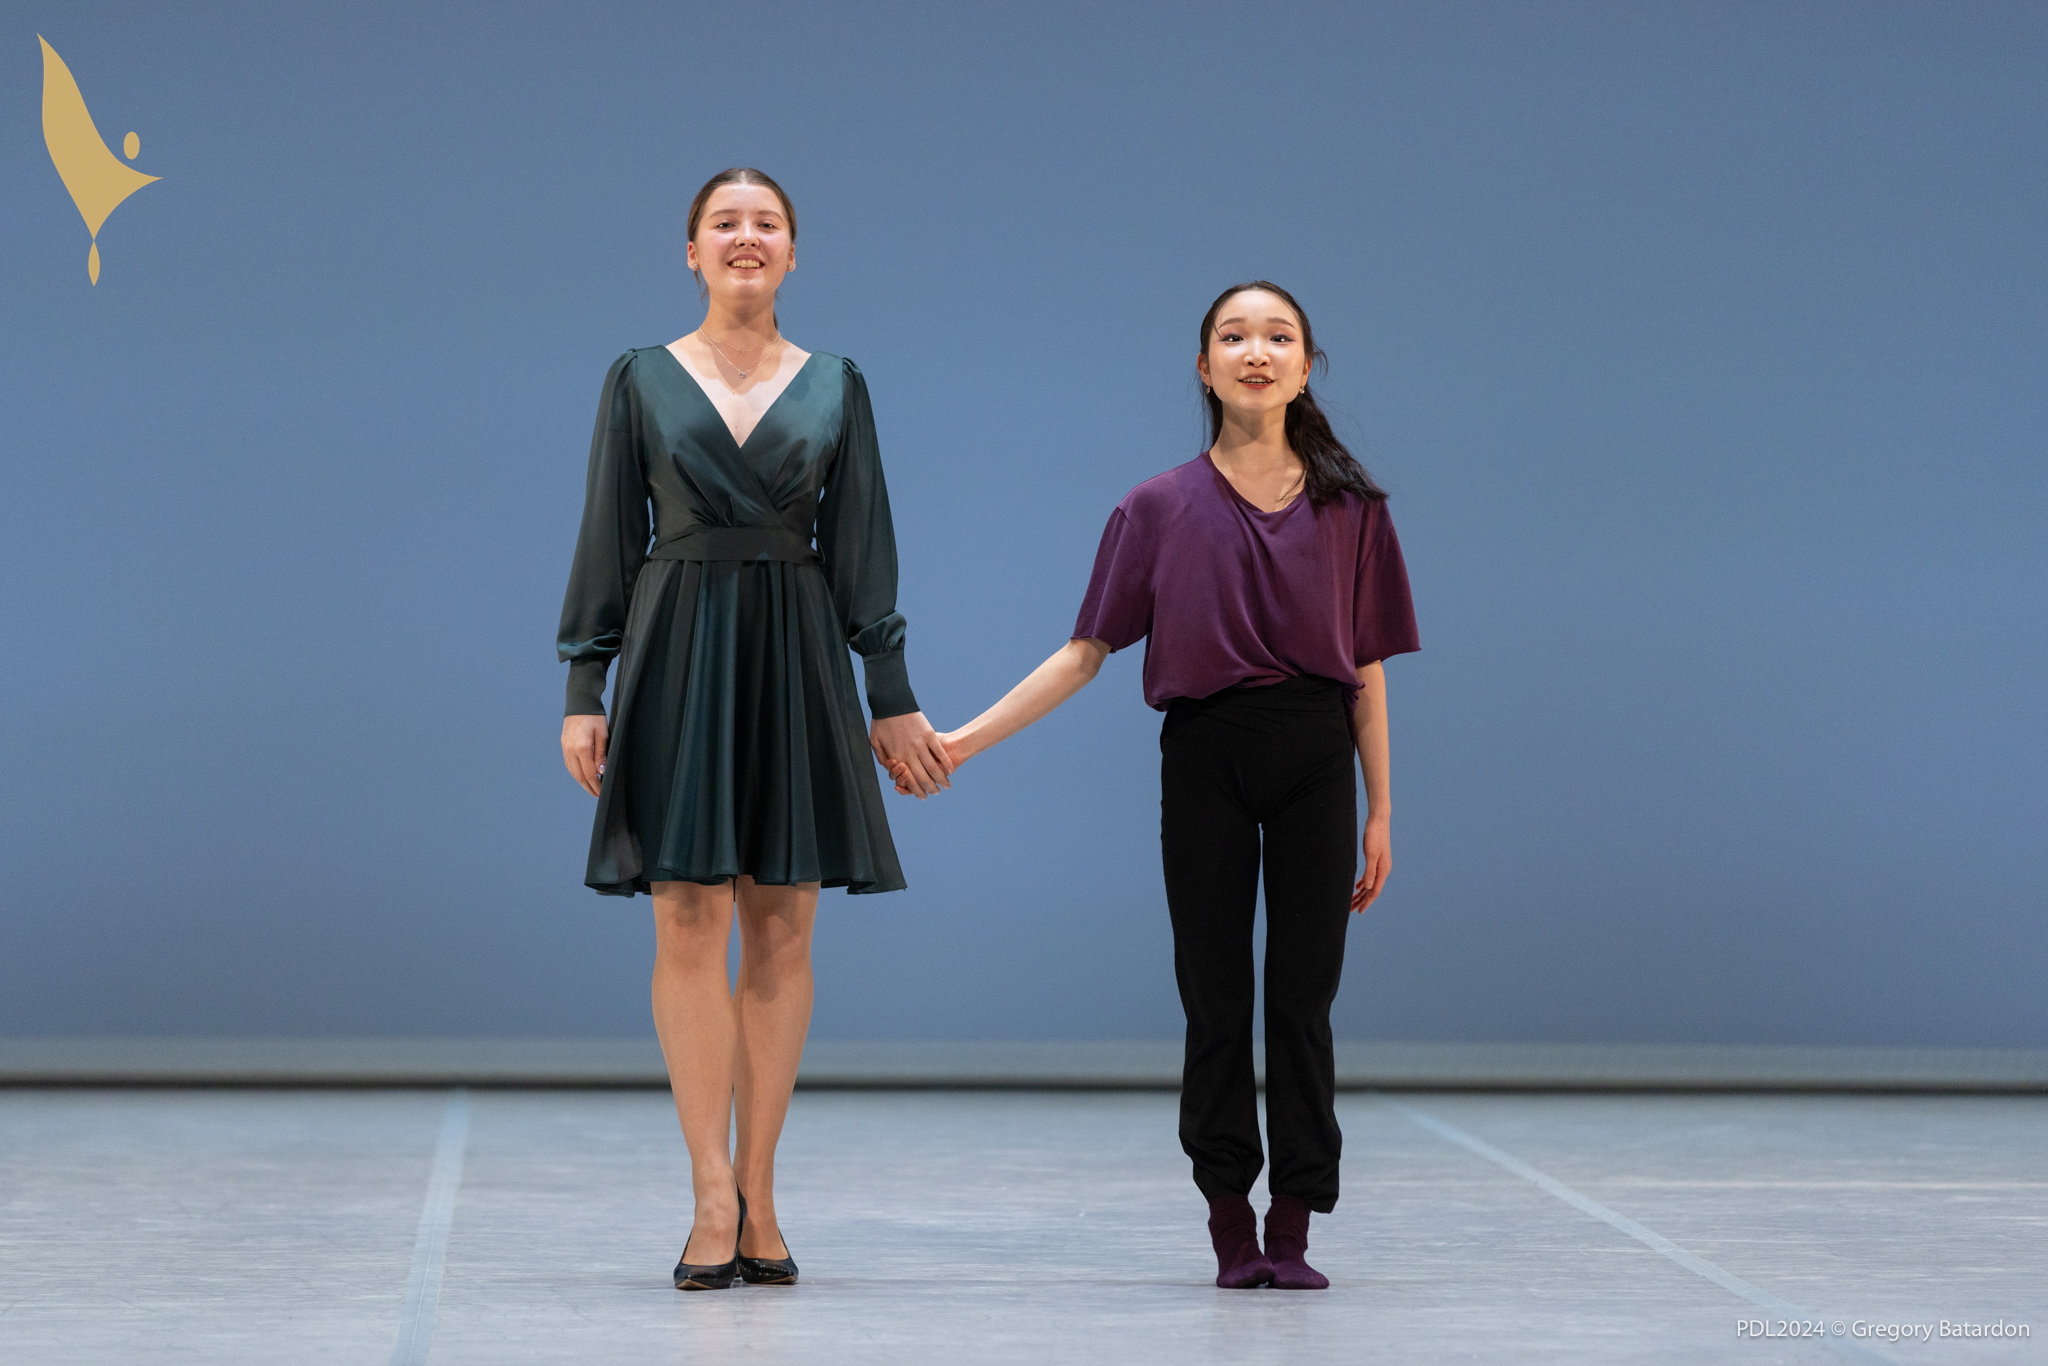 Kseniya Kosava and Sakura Natorigawa hold hands onstage and prepare to take a bow, Kosava wears a short green, long-sleeved dress and heels. Natorigawa wears a purple shirt, black pants and purple socks.